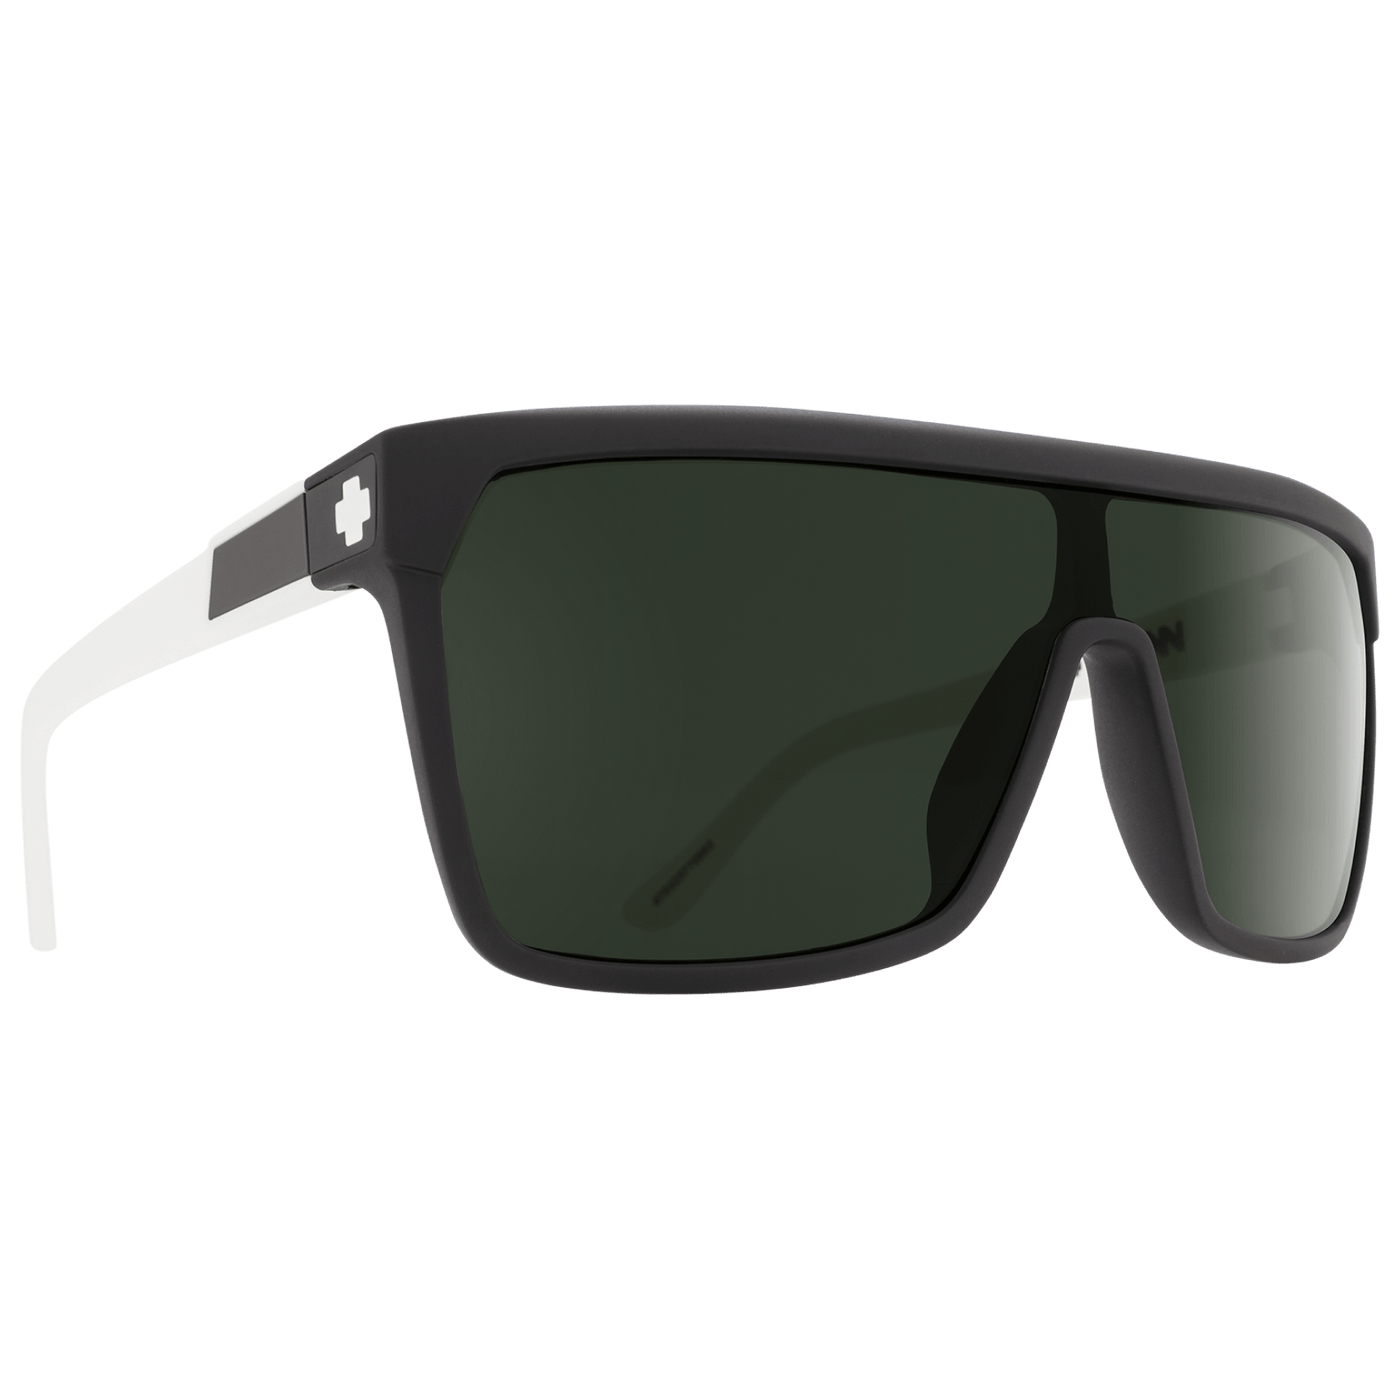 SPY Flynn Sunglasses, Happy Lens - Matte Ebony Ivory 8Lines Shop - Fast Shipping